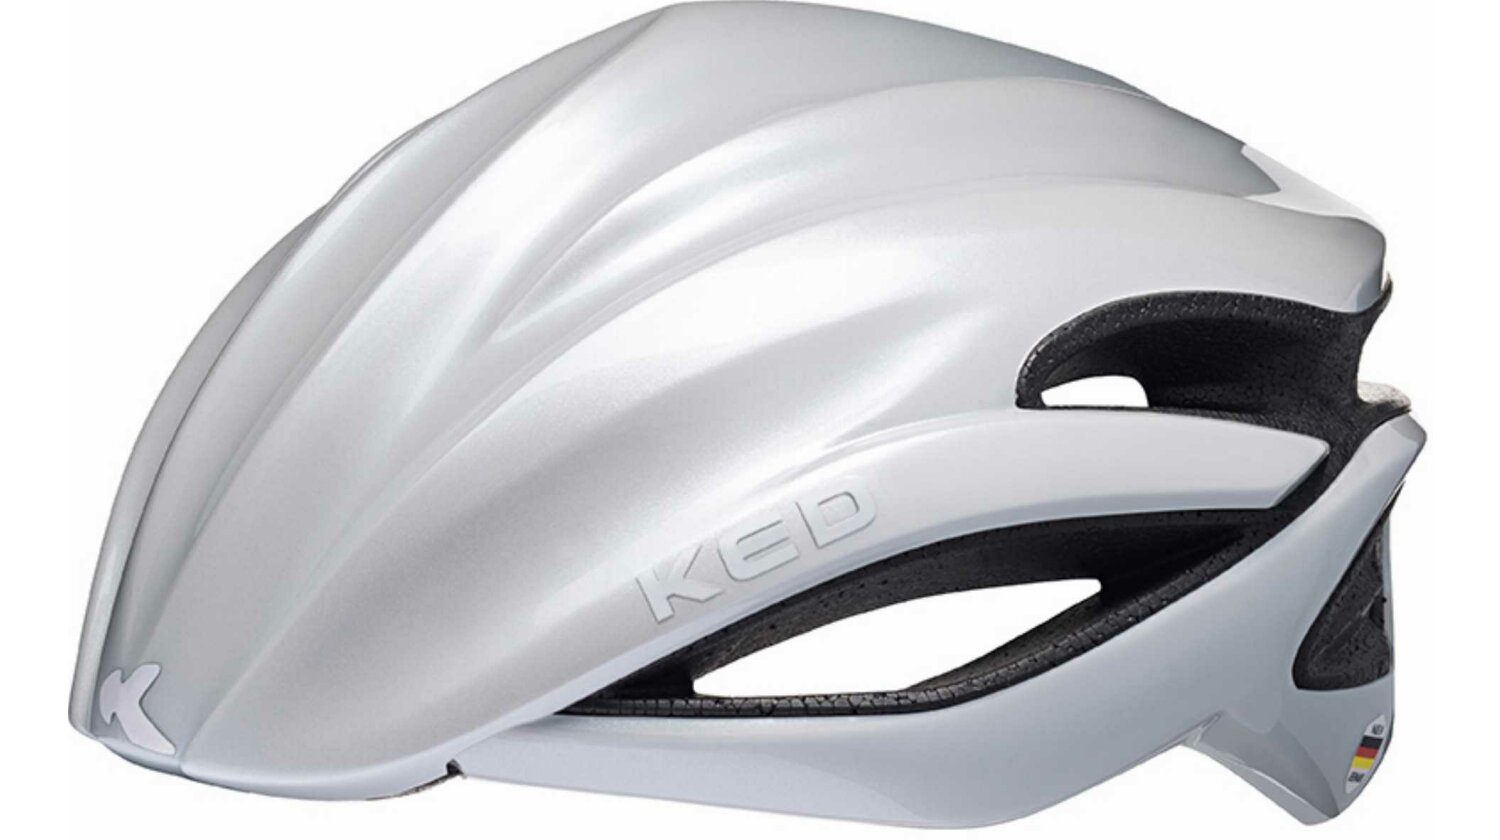 KED Rayzon Race Rennrad-Helm white